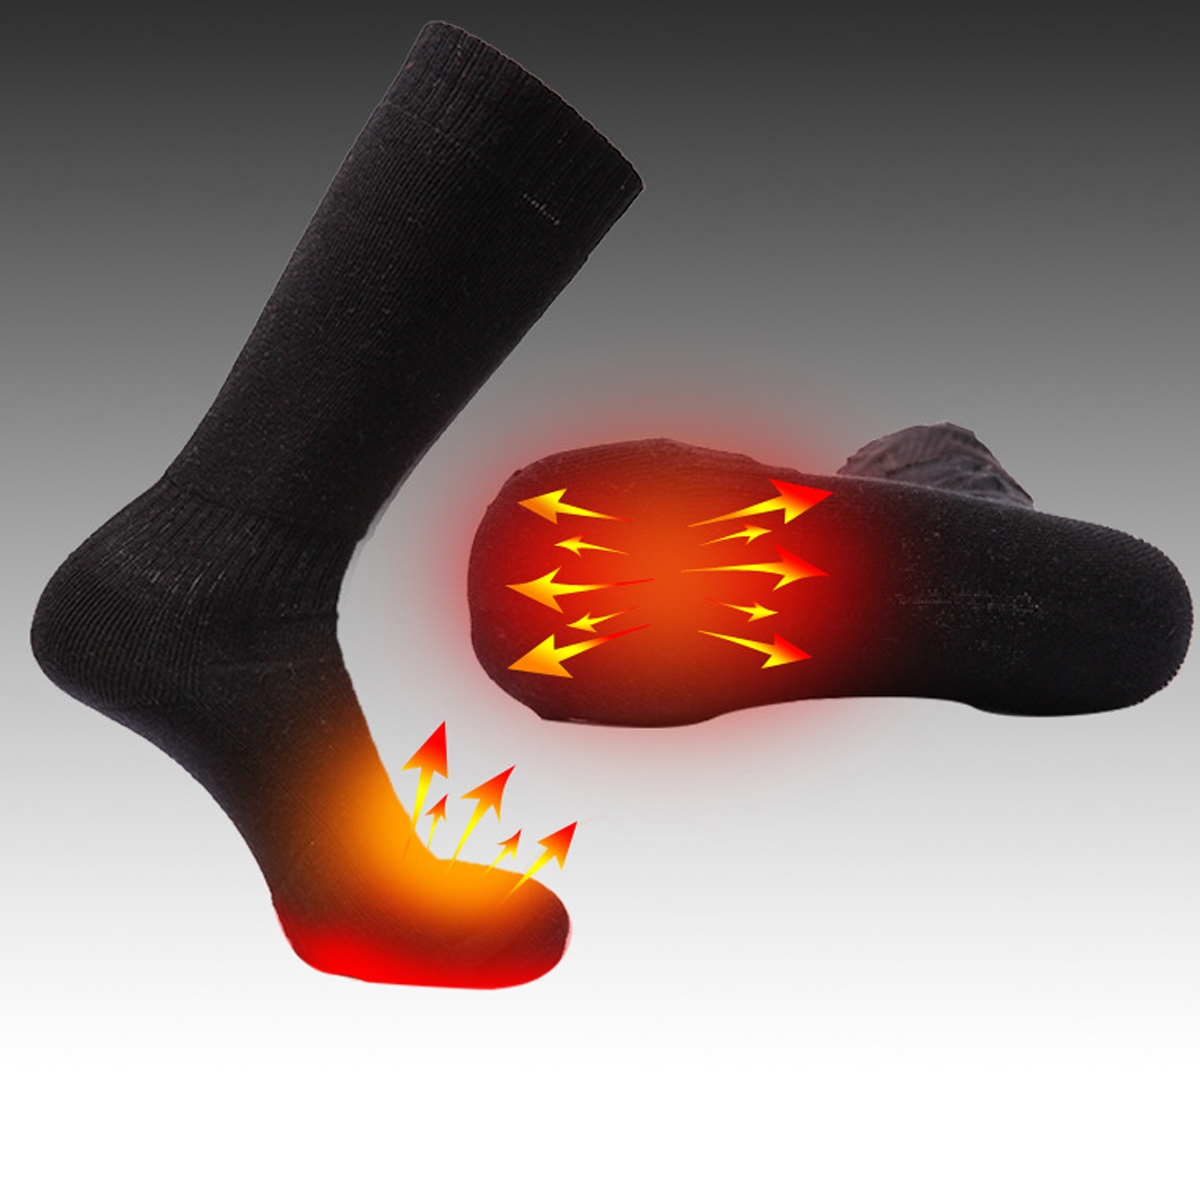 SAVIOR-74V-2200mAh-Electric-Heated-Socks-Rechargeable-Battery-Feet-Warmer-For-Skiing-1425472-3